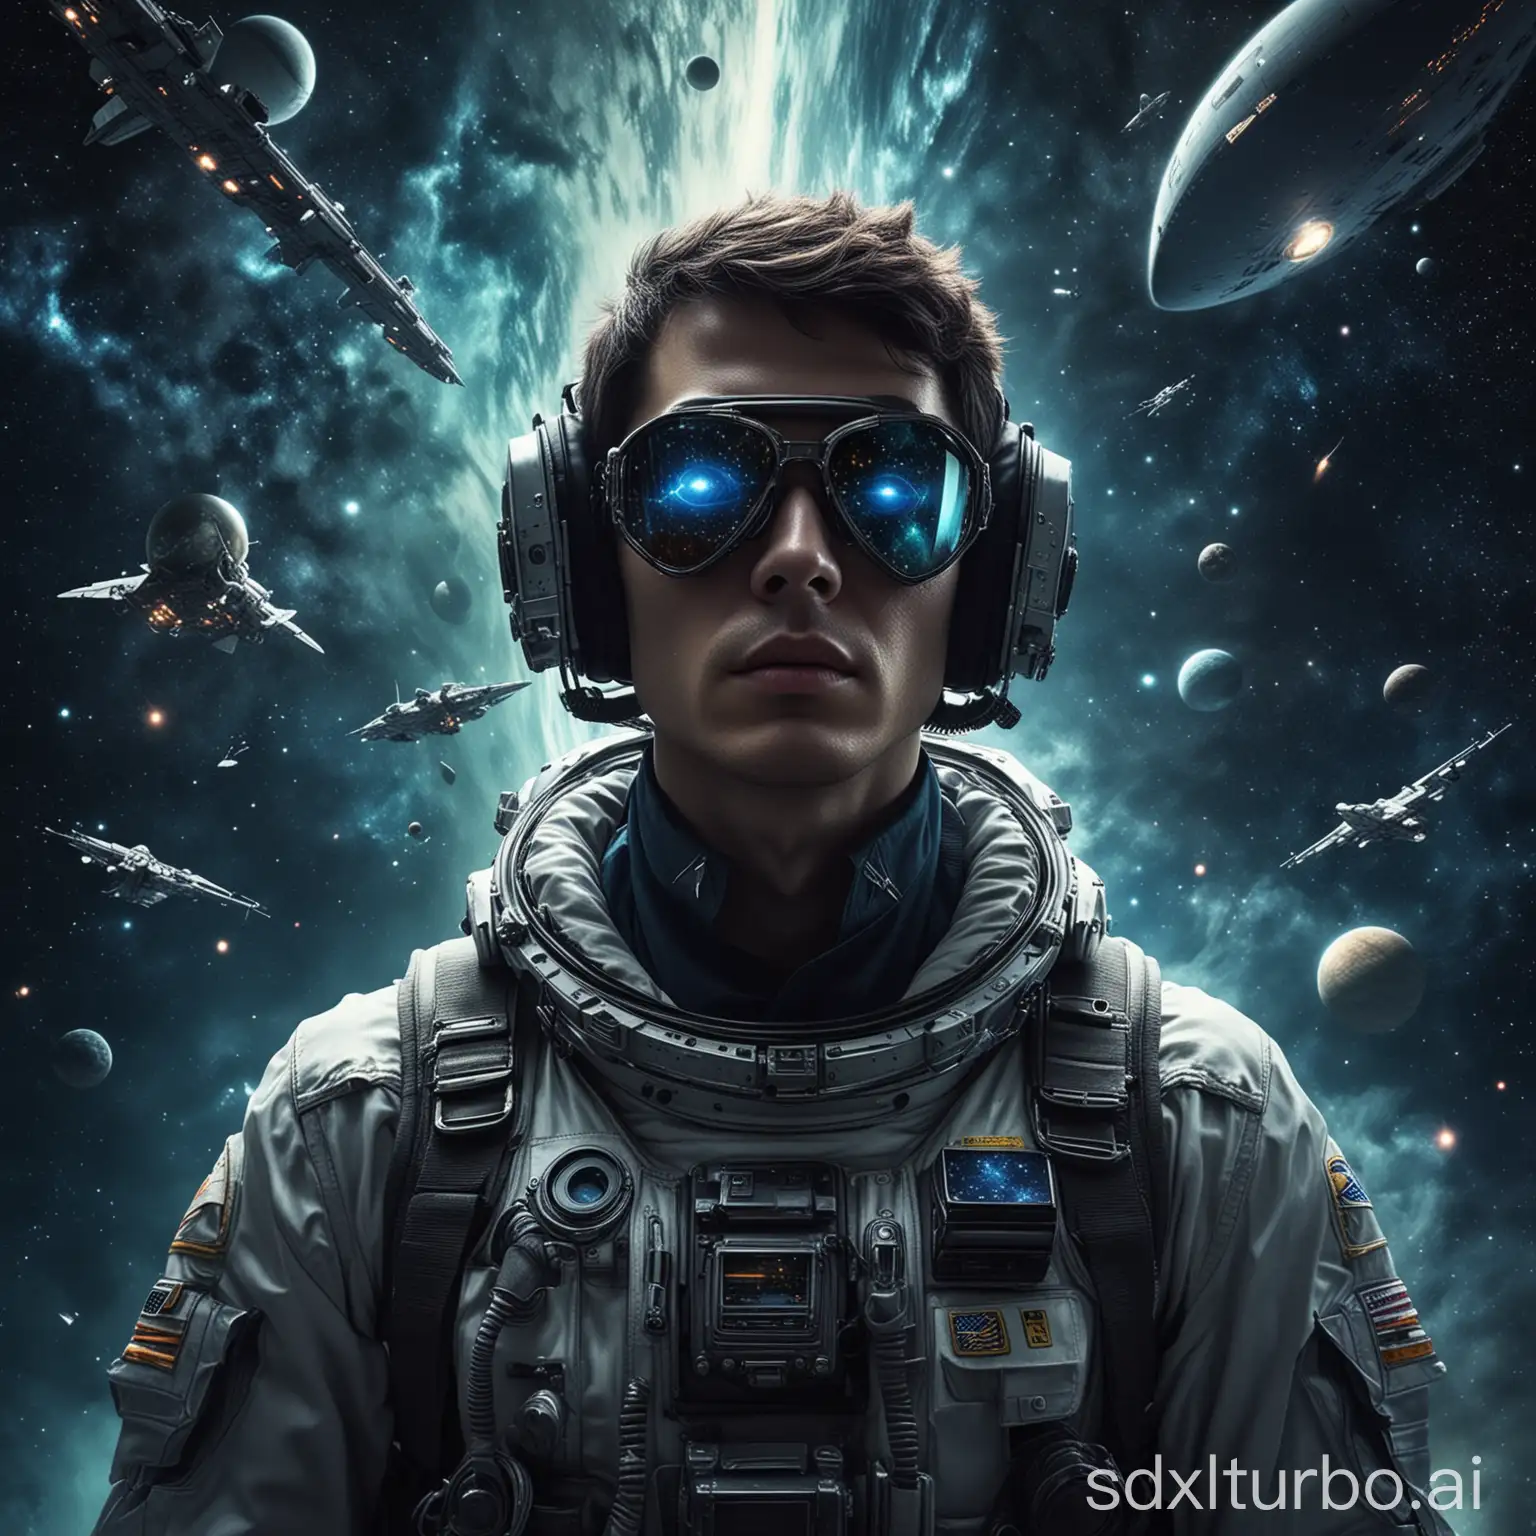 Surreal-Future-Retro-Navy-Astronaut-Amid-Cosmic-Wonders